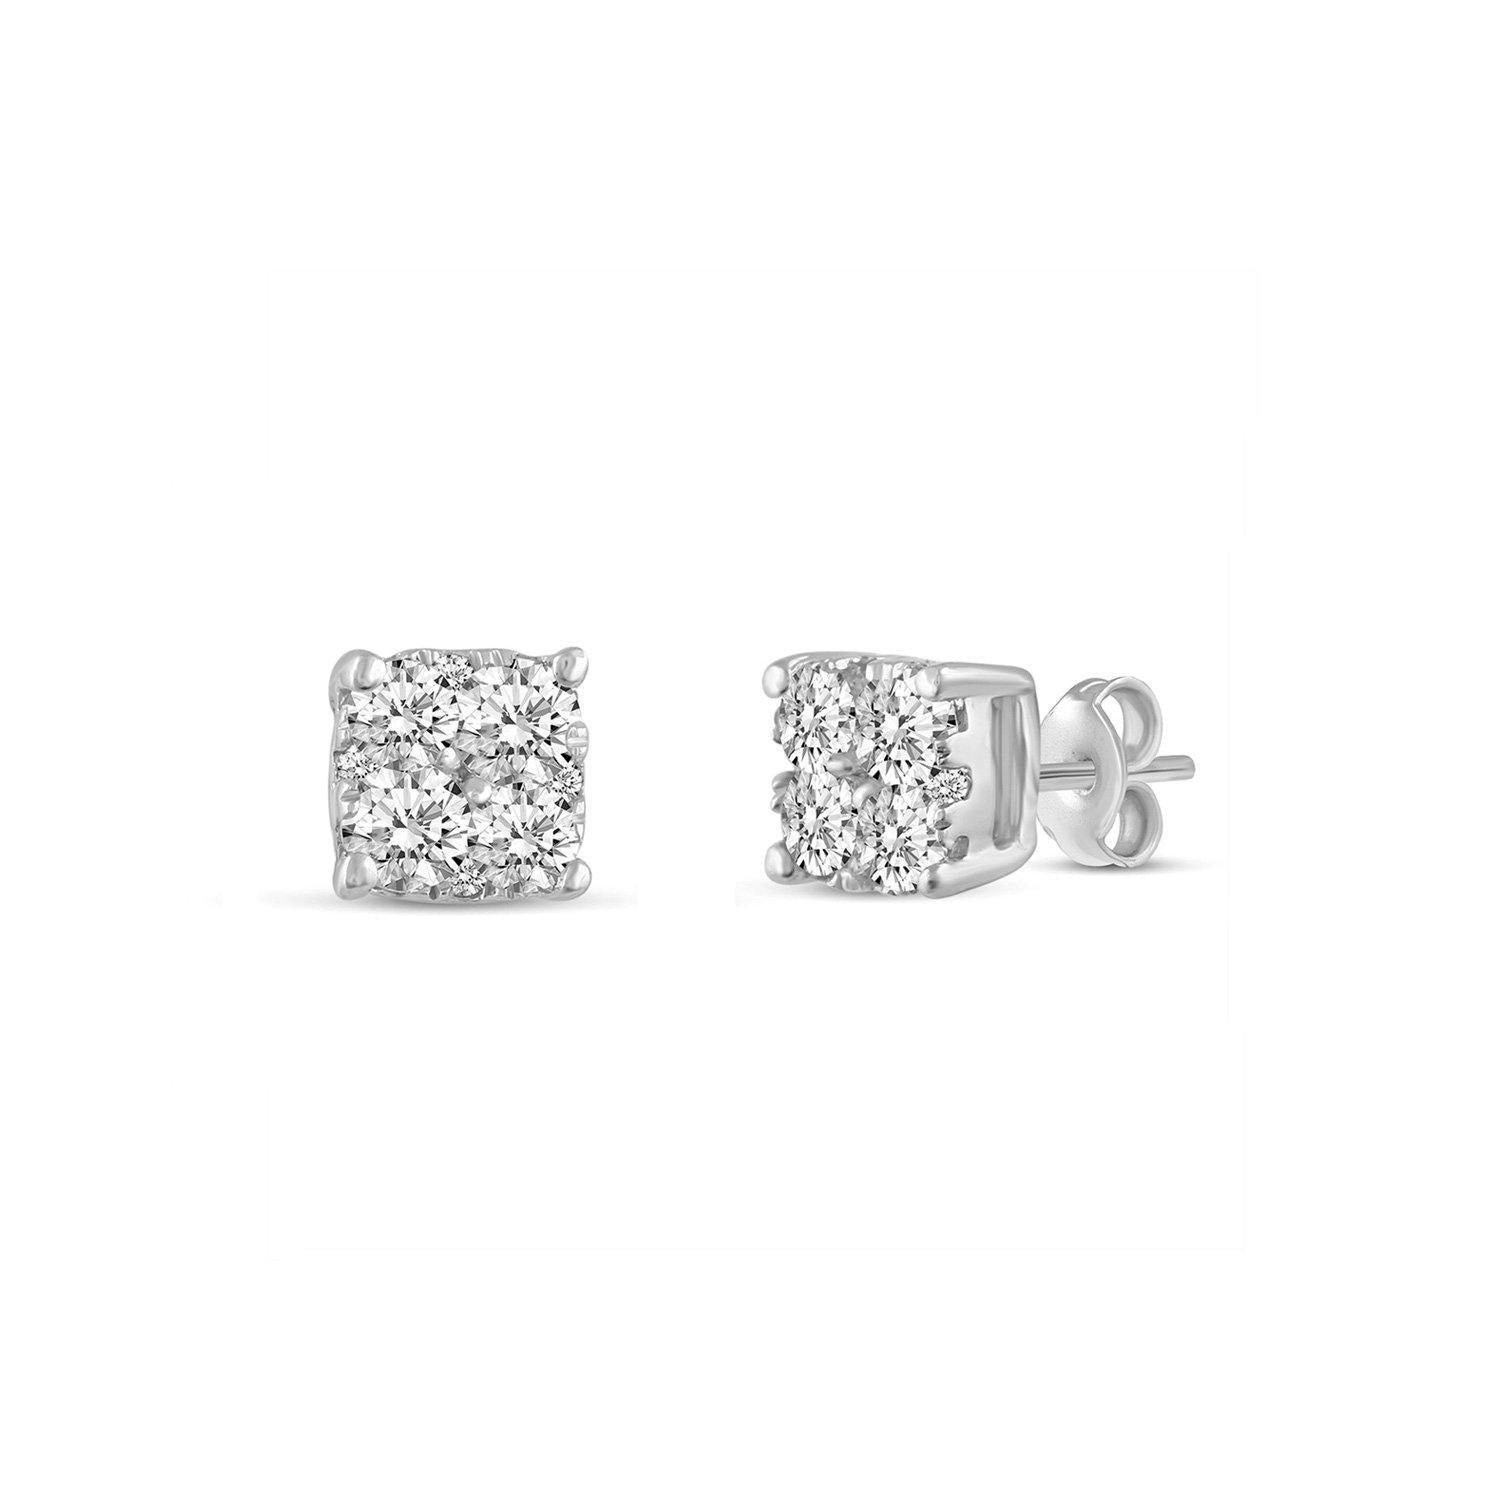 1/4 - 1 1/2 Cttw Cushion Diamond Stud Earrings Set in 925 Sterling Silver 1/4ct